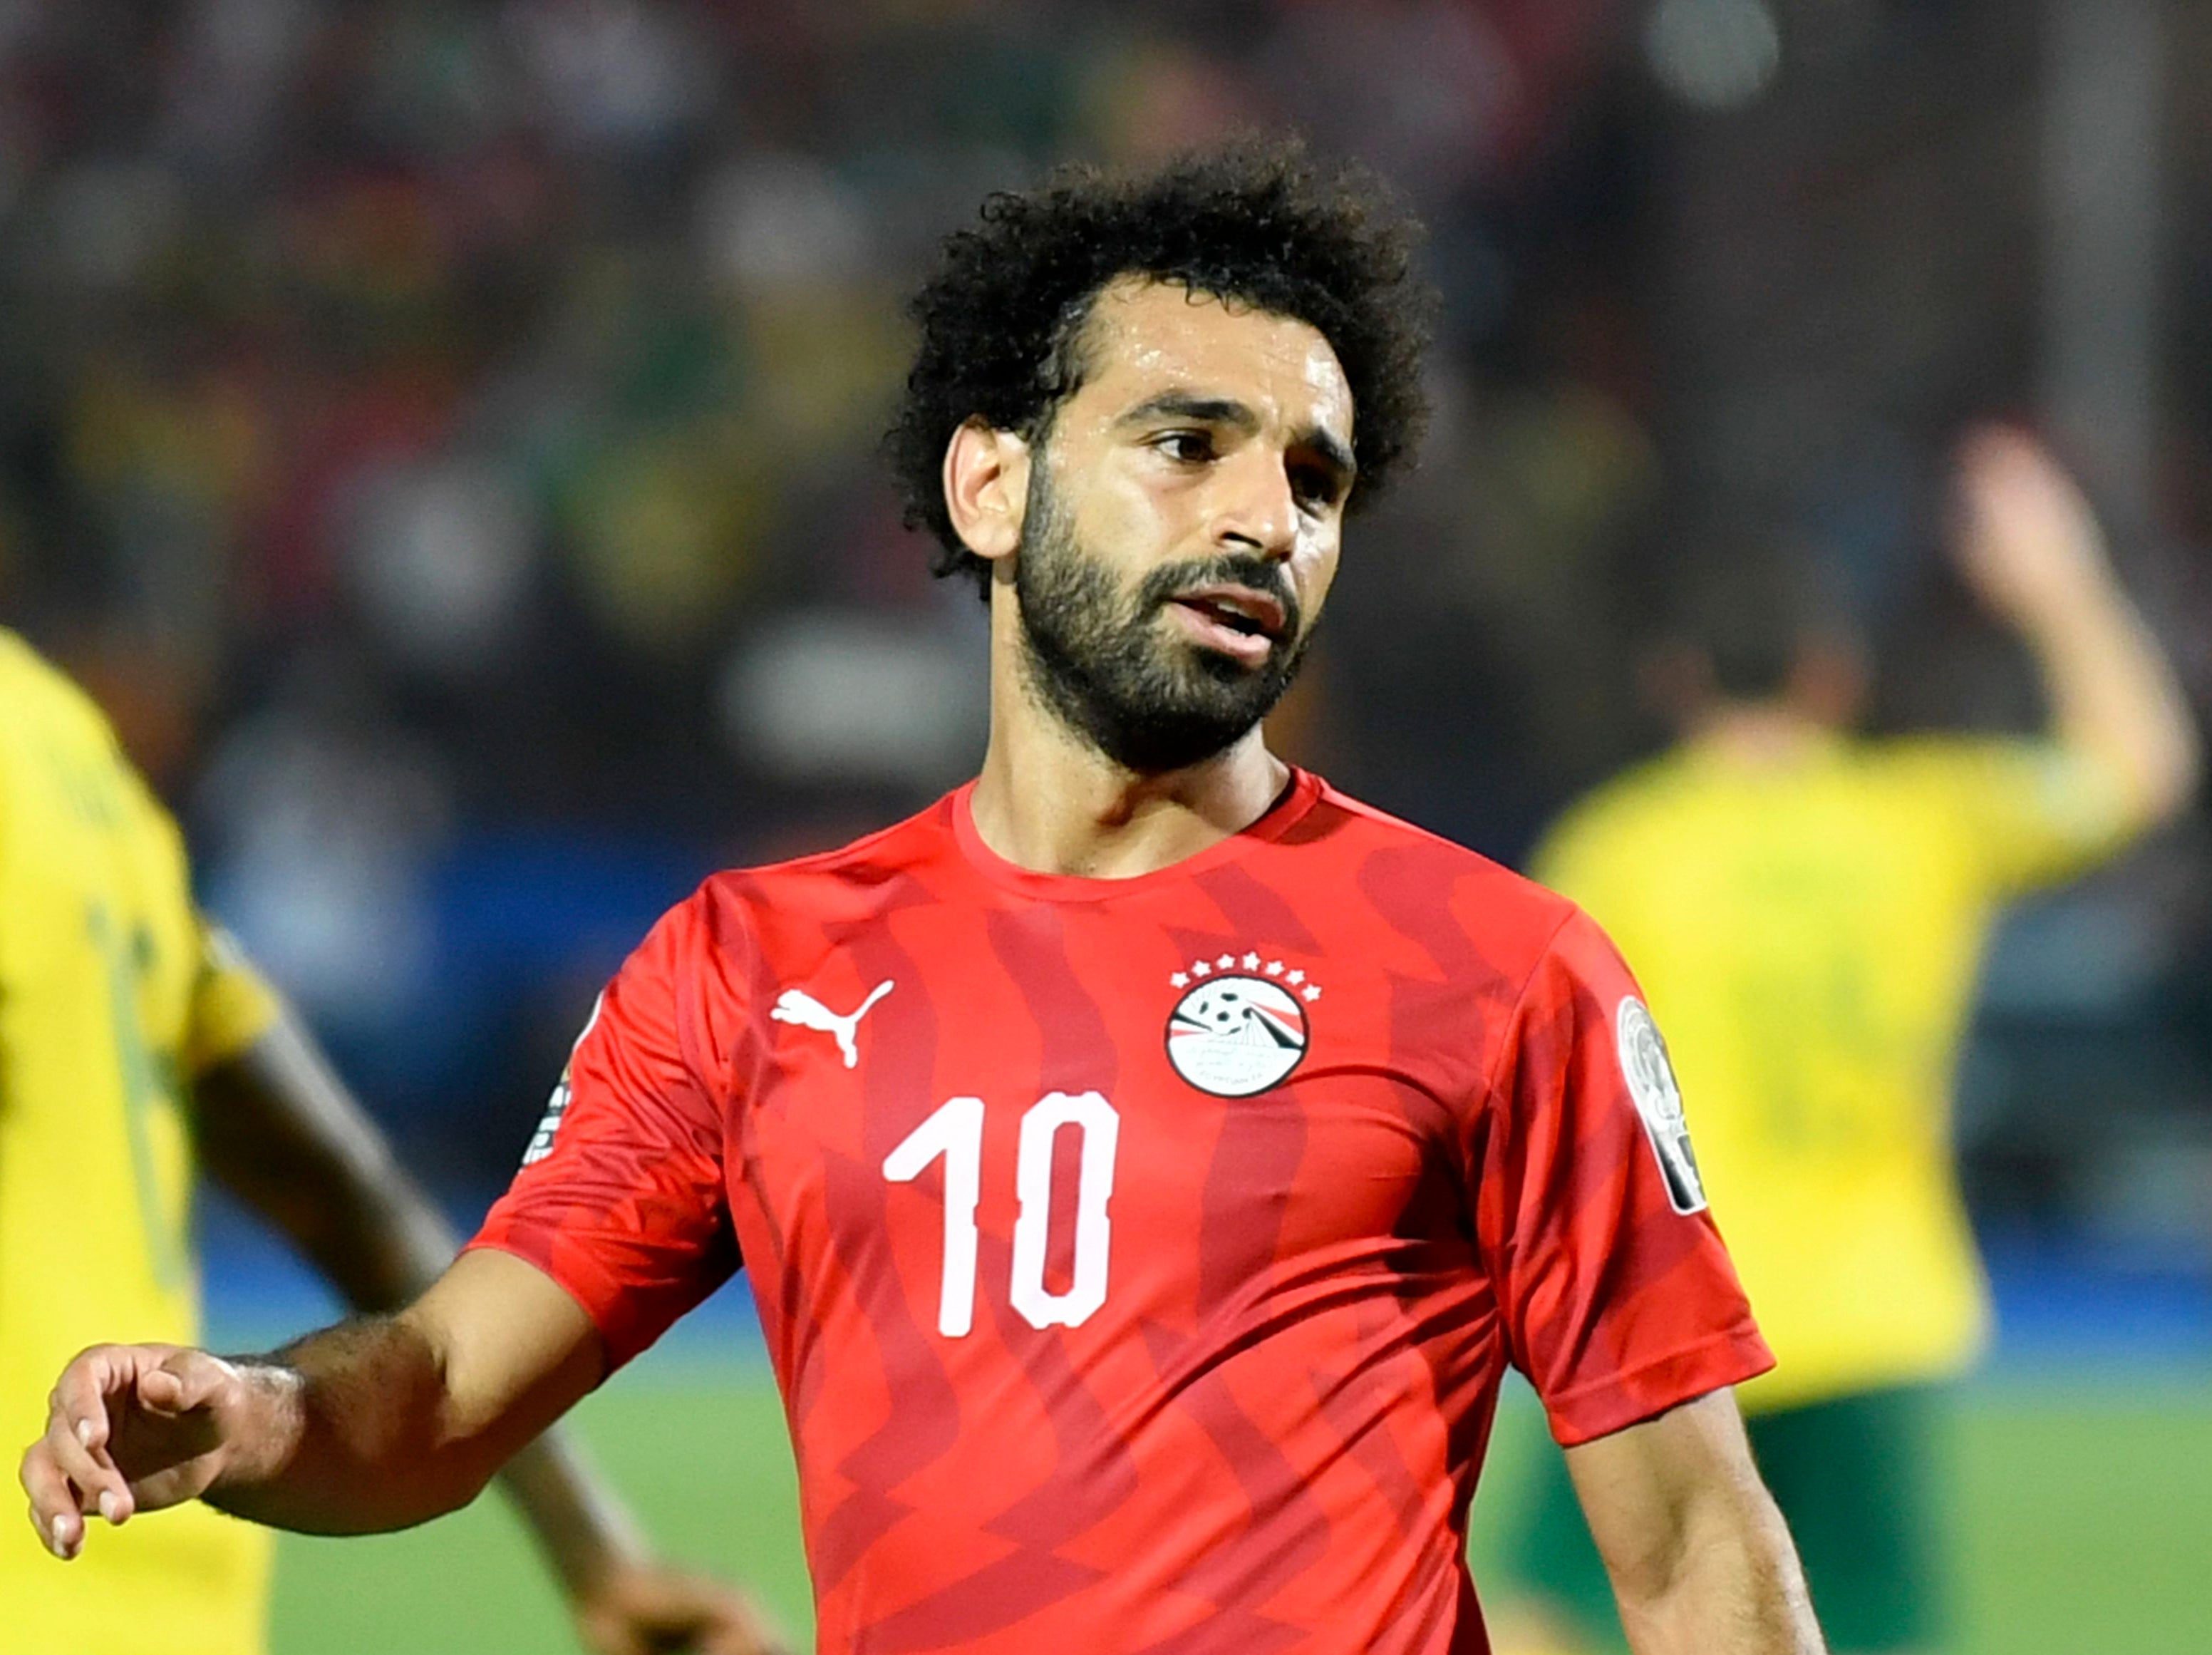 Liverpool forward Mo Salah on international duty with Egypt